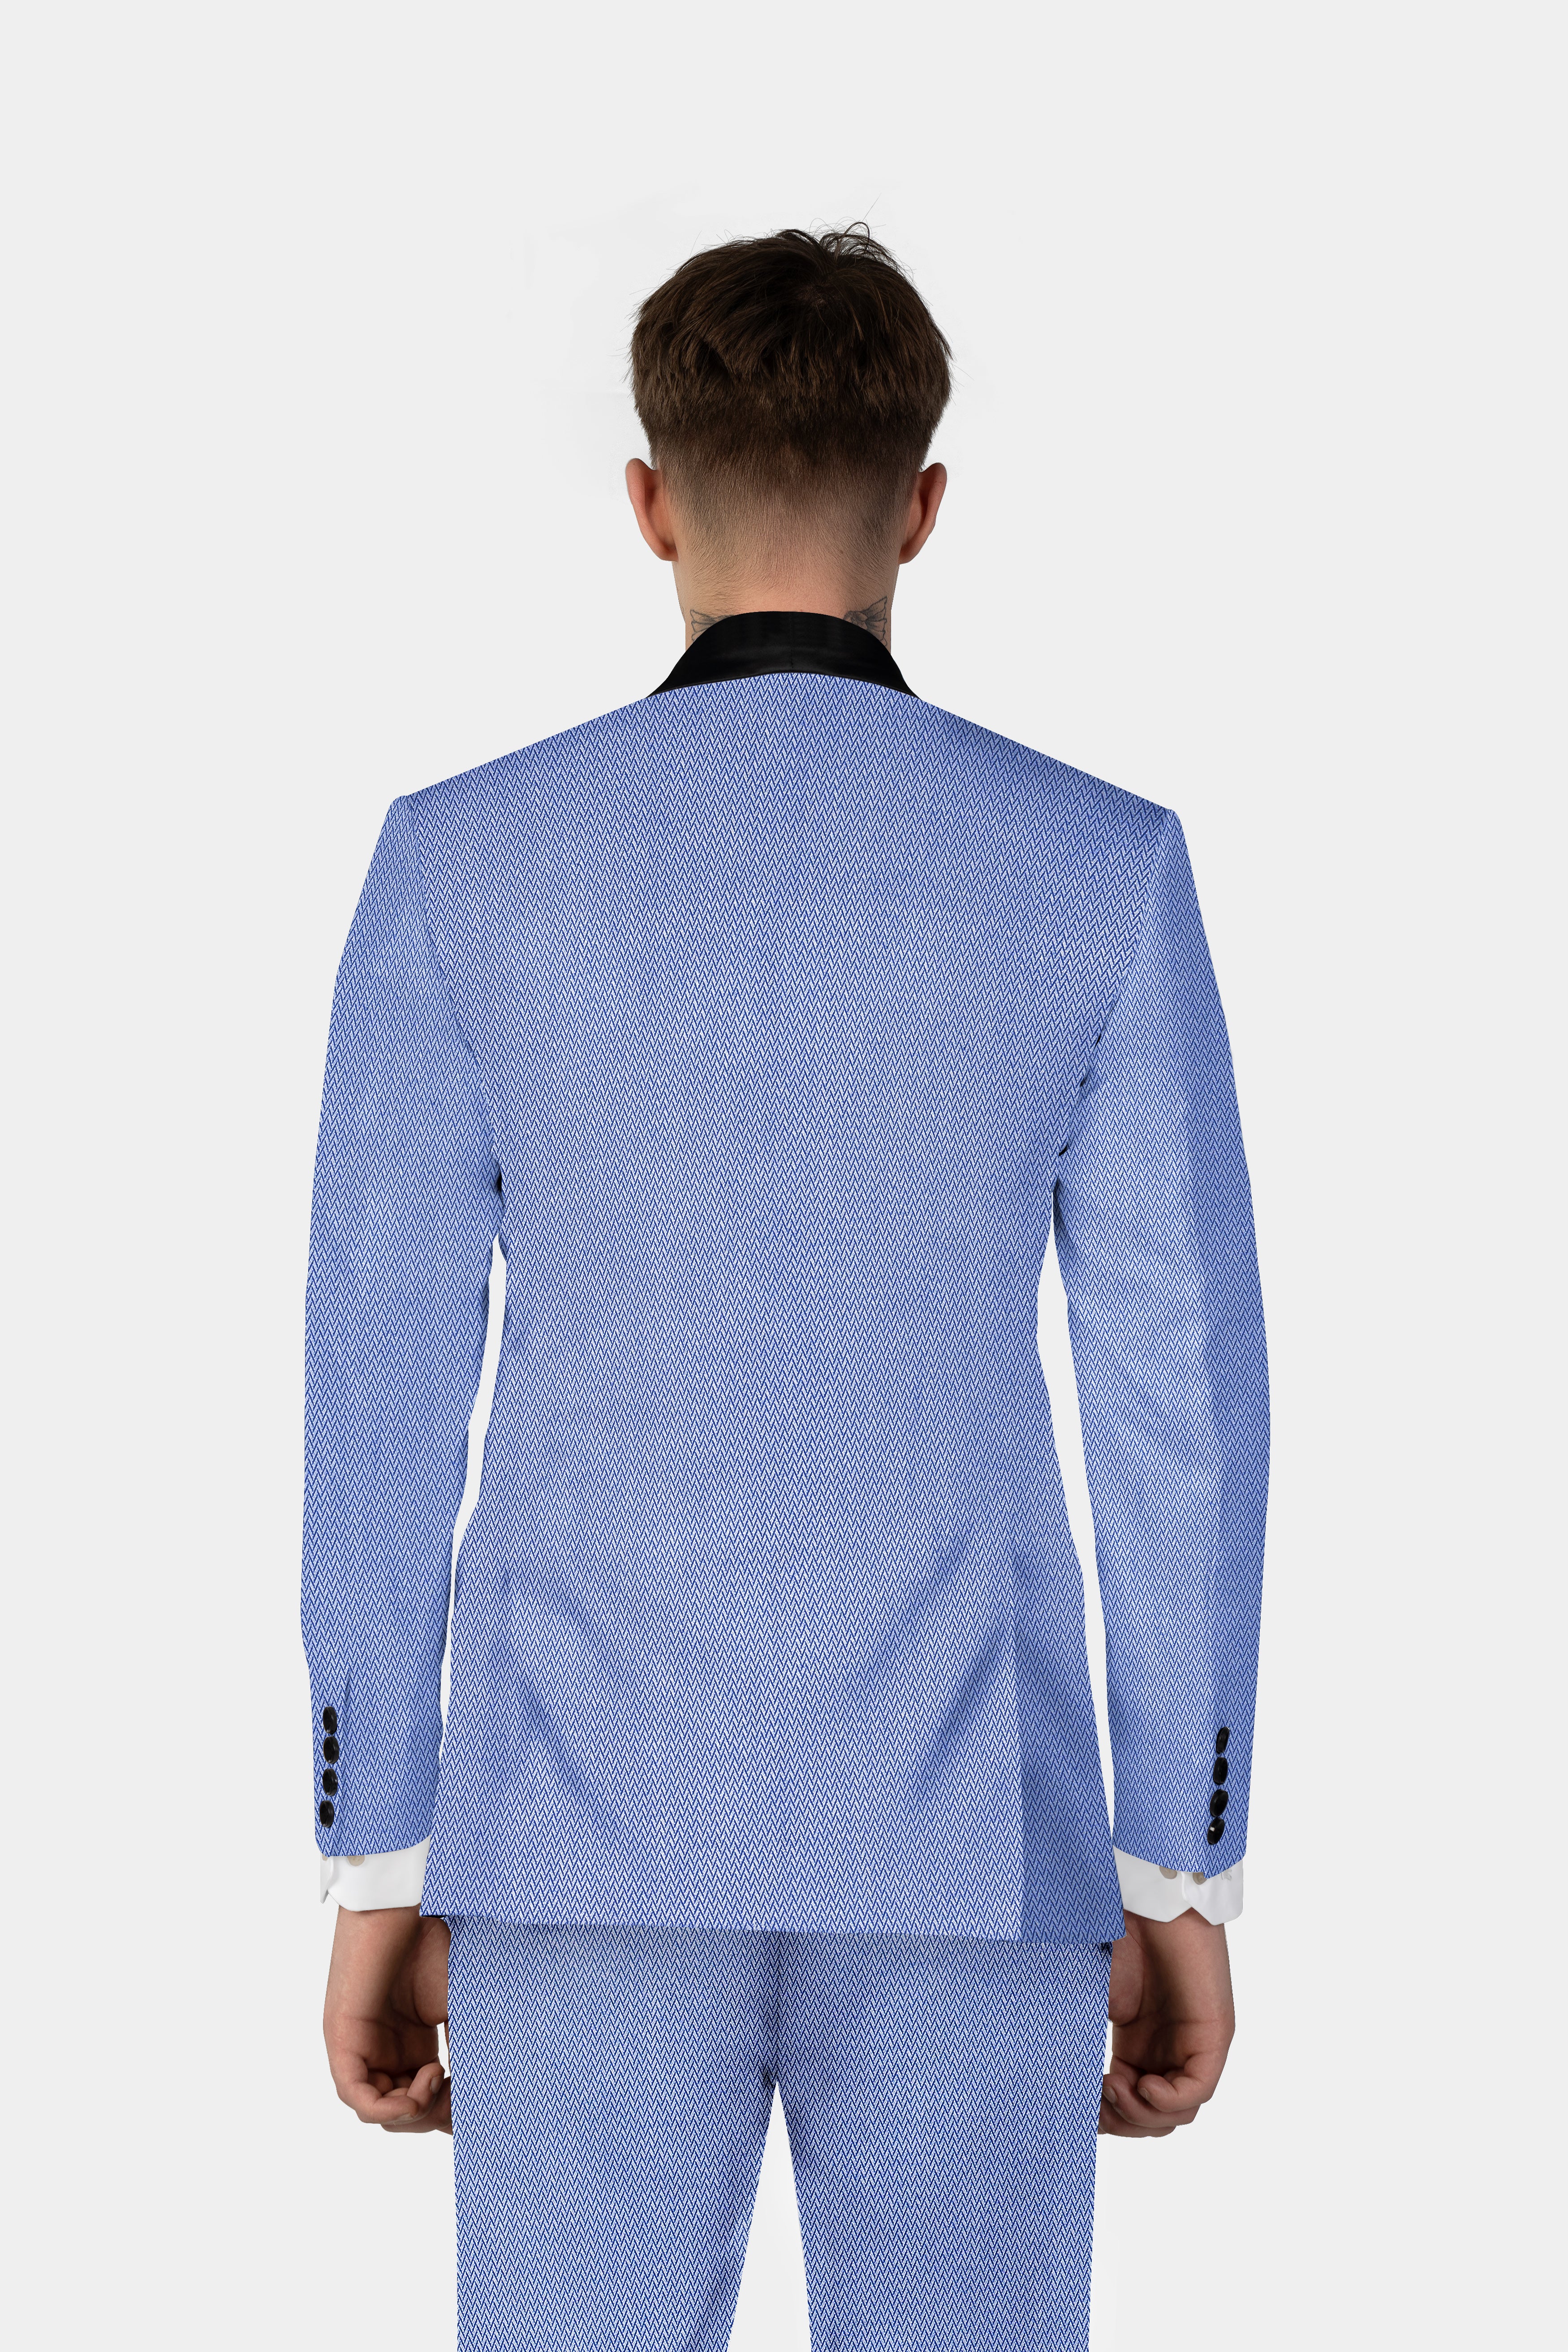 Carolina Blue Textured Tuxedo Suit